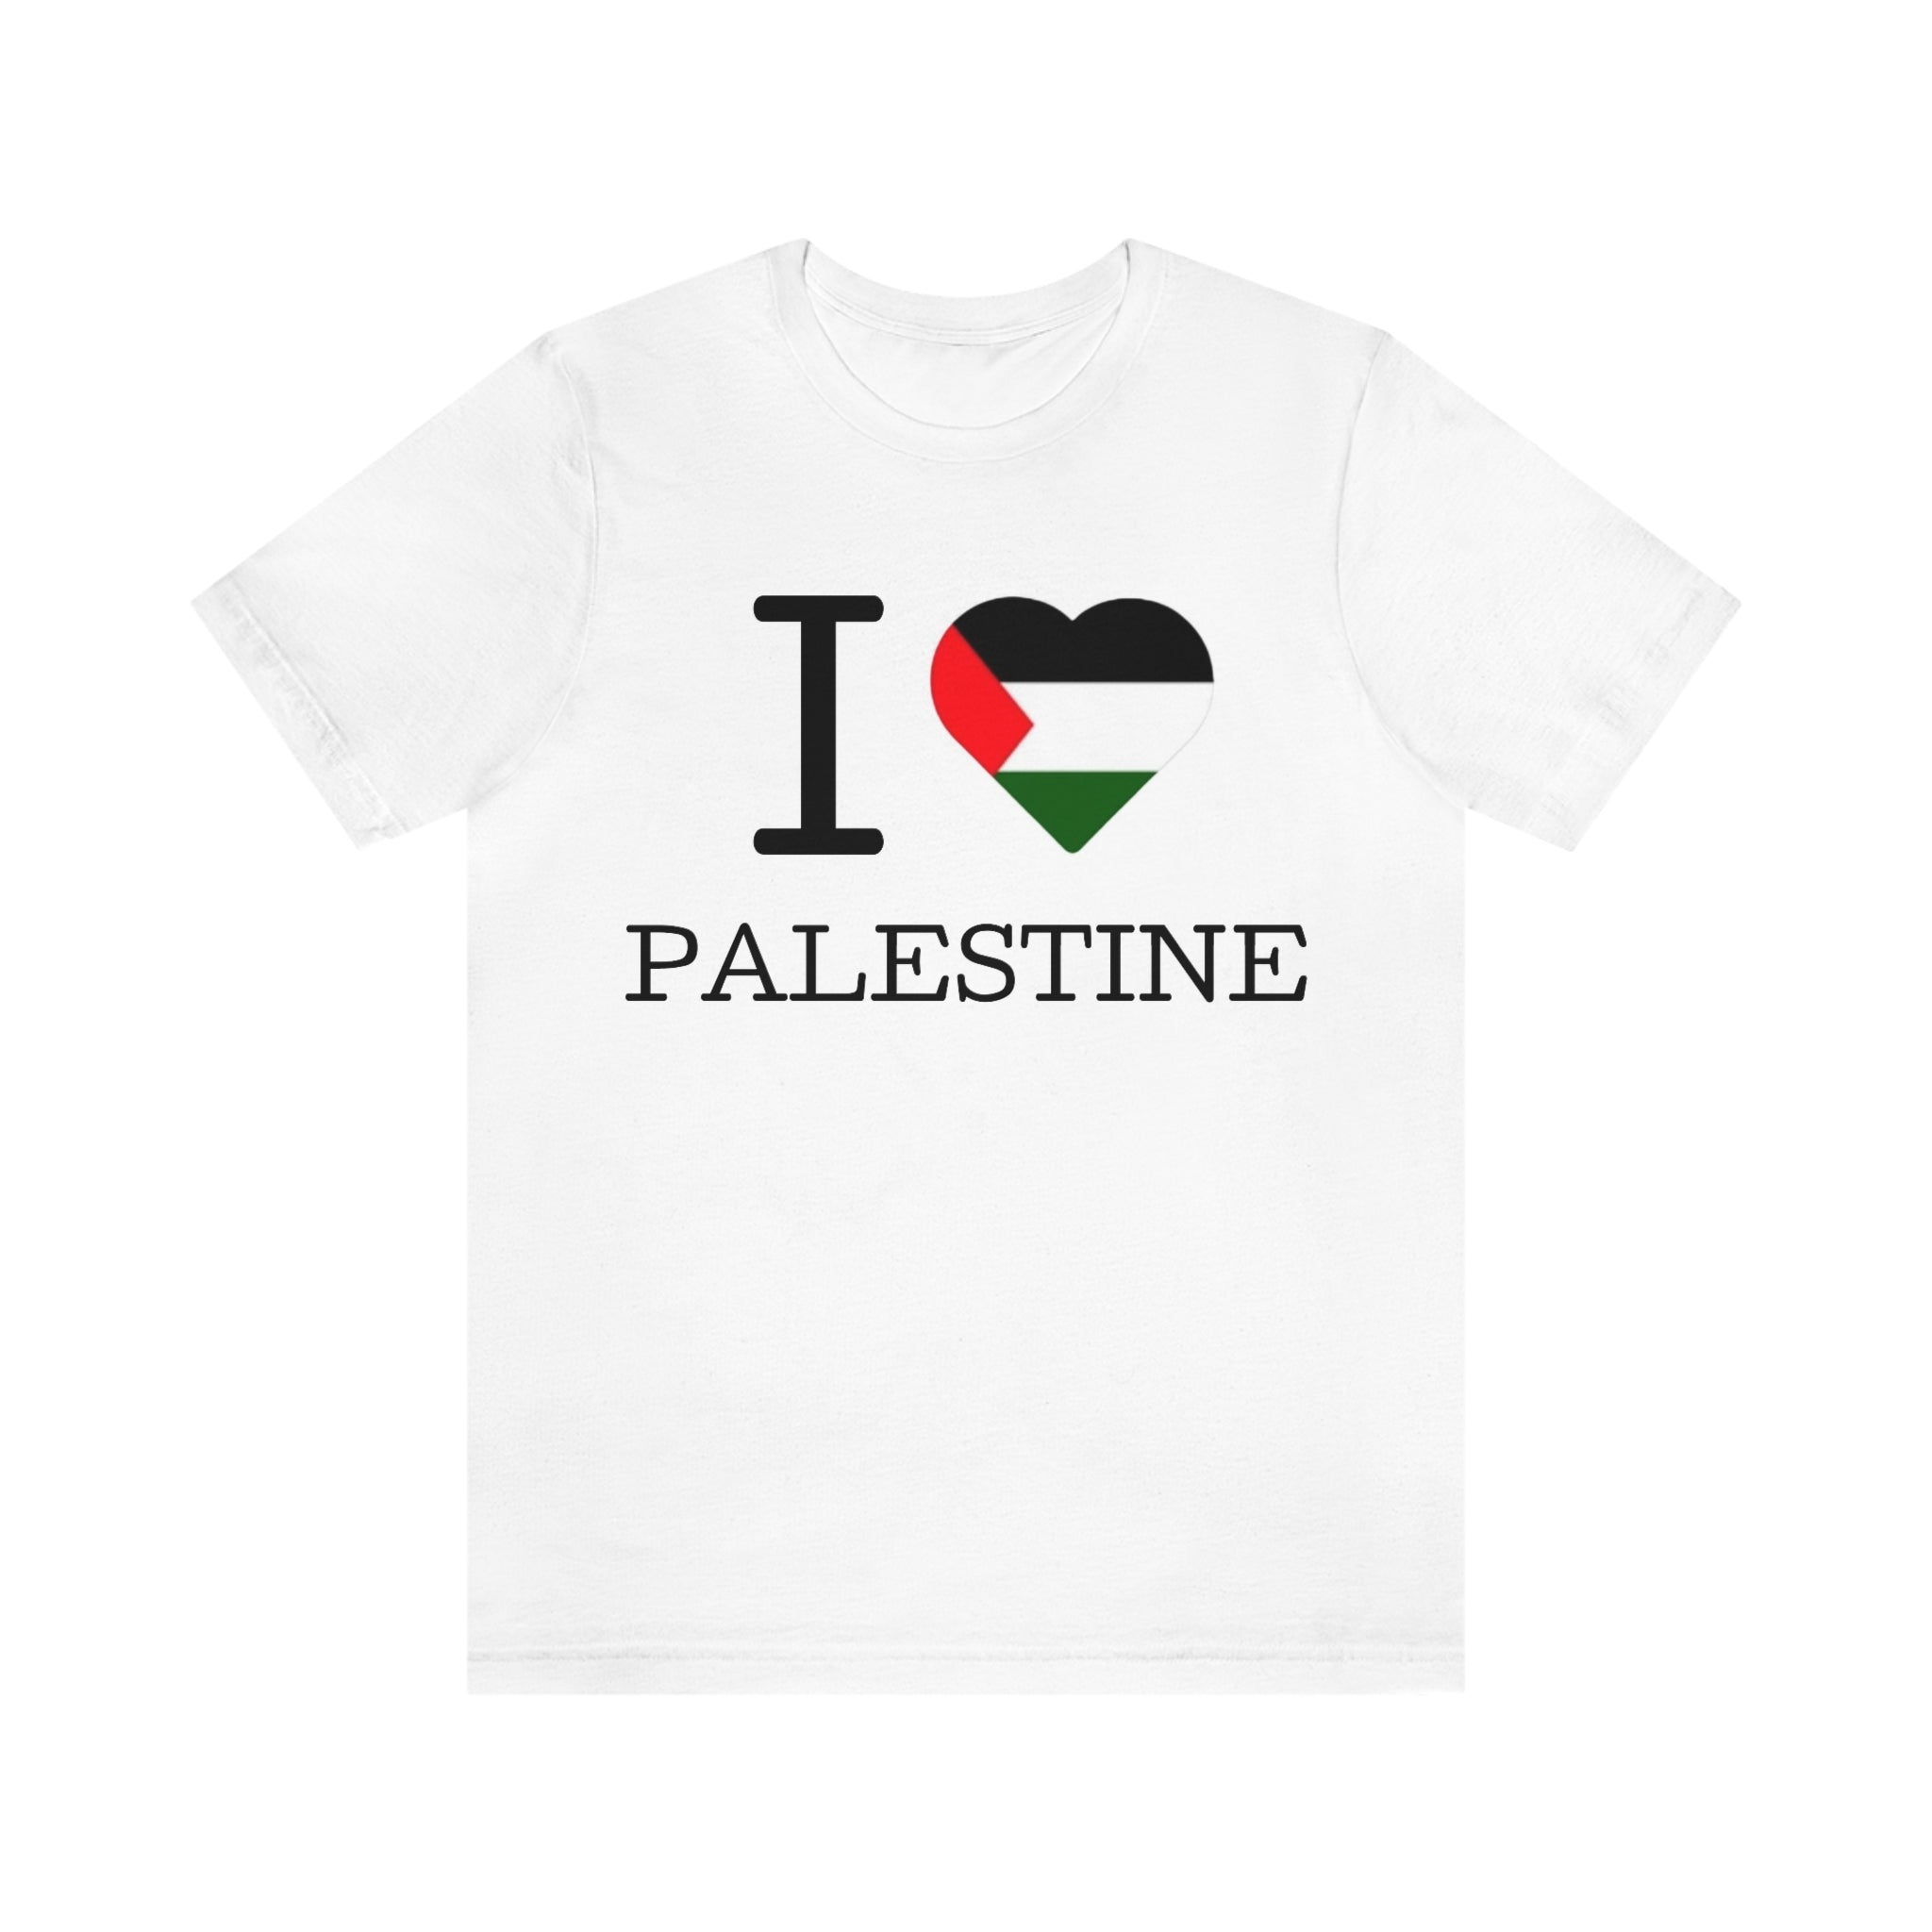 I Love Palestine Tee